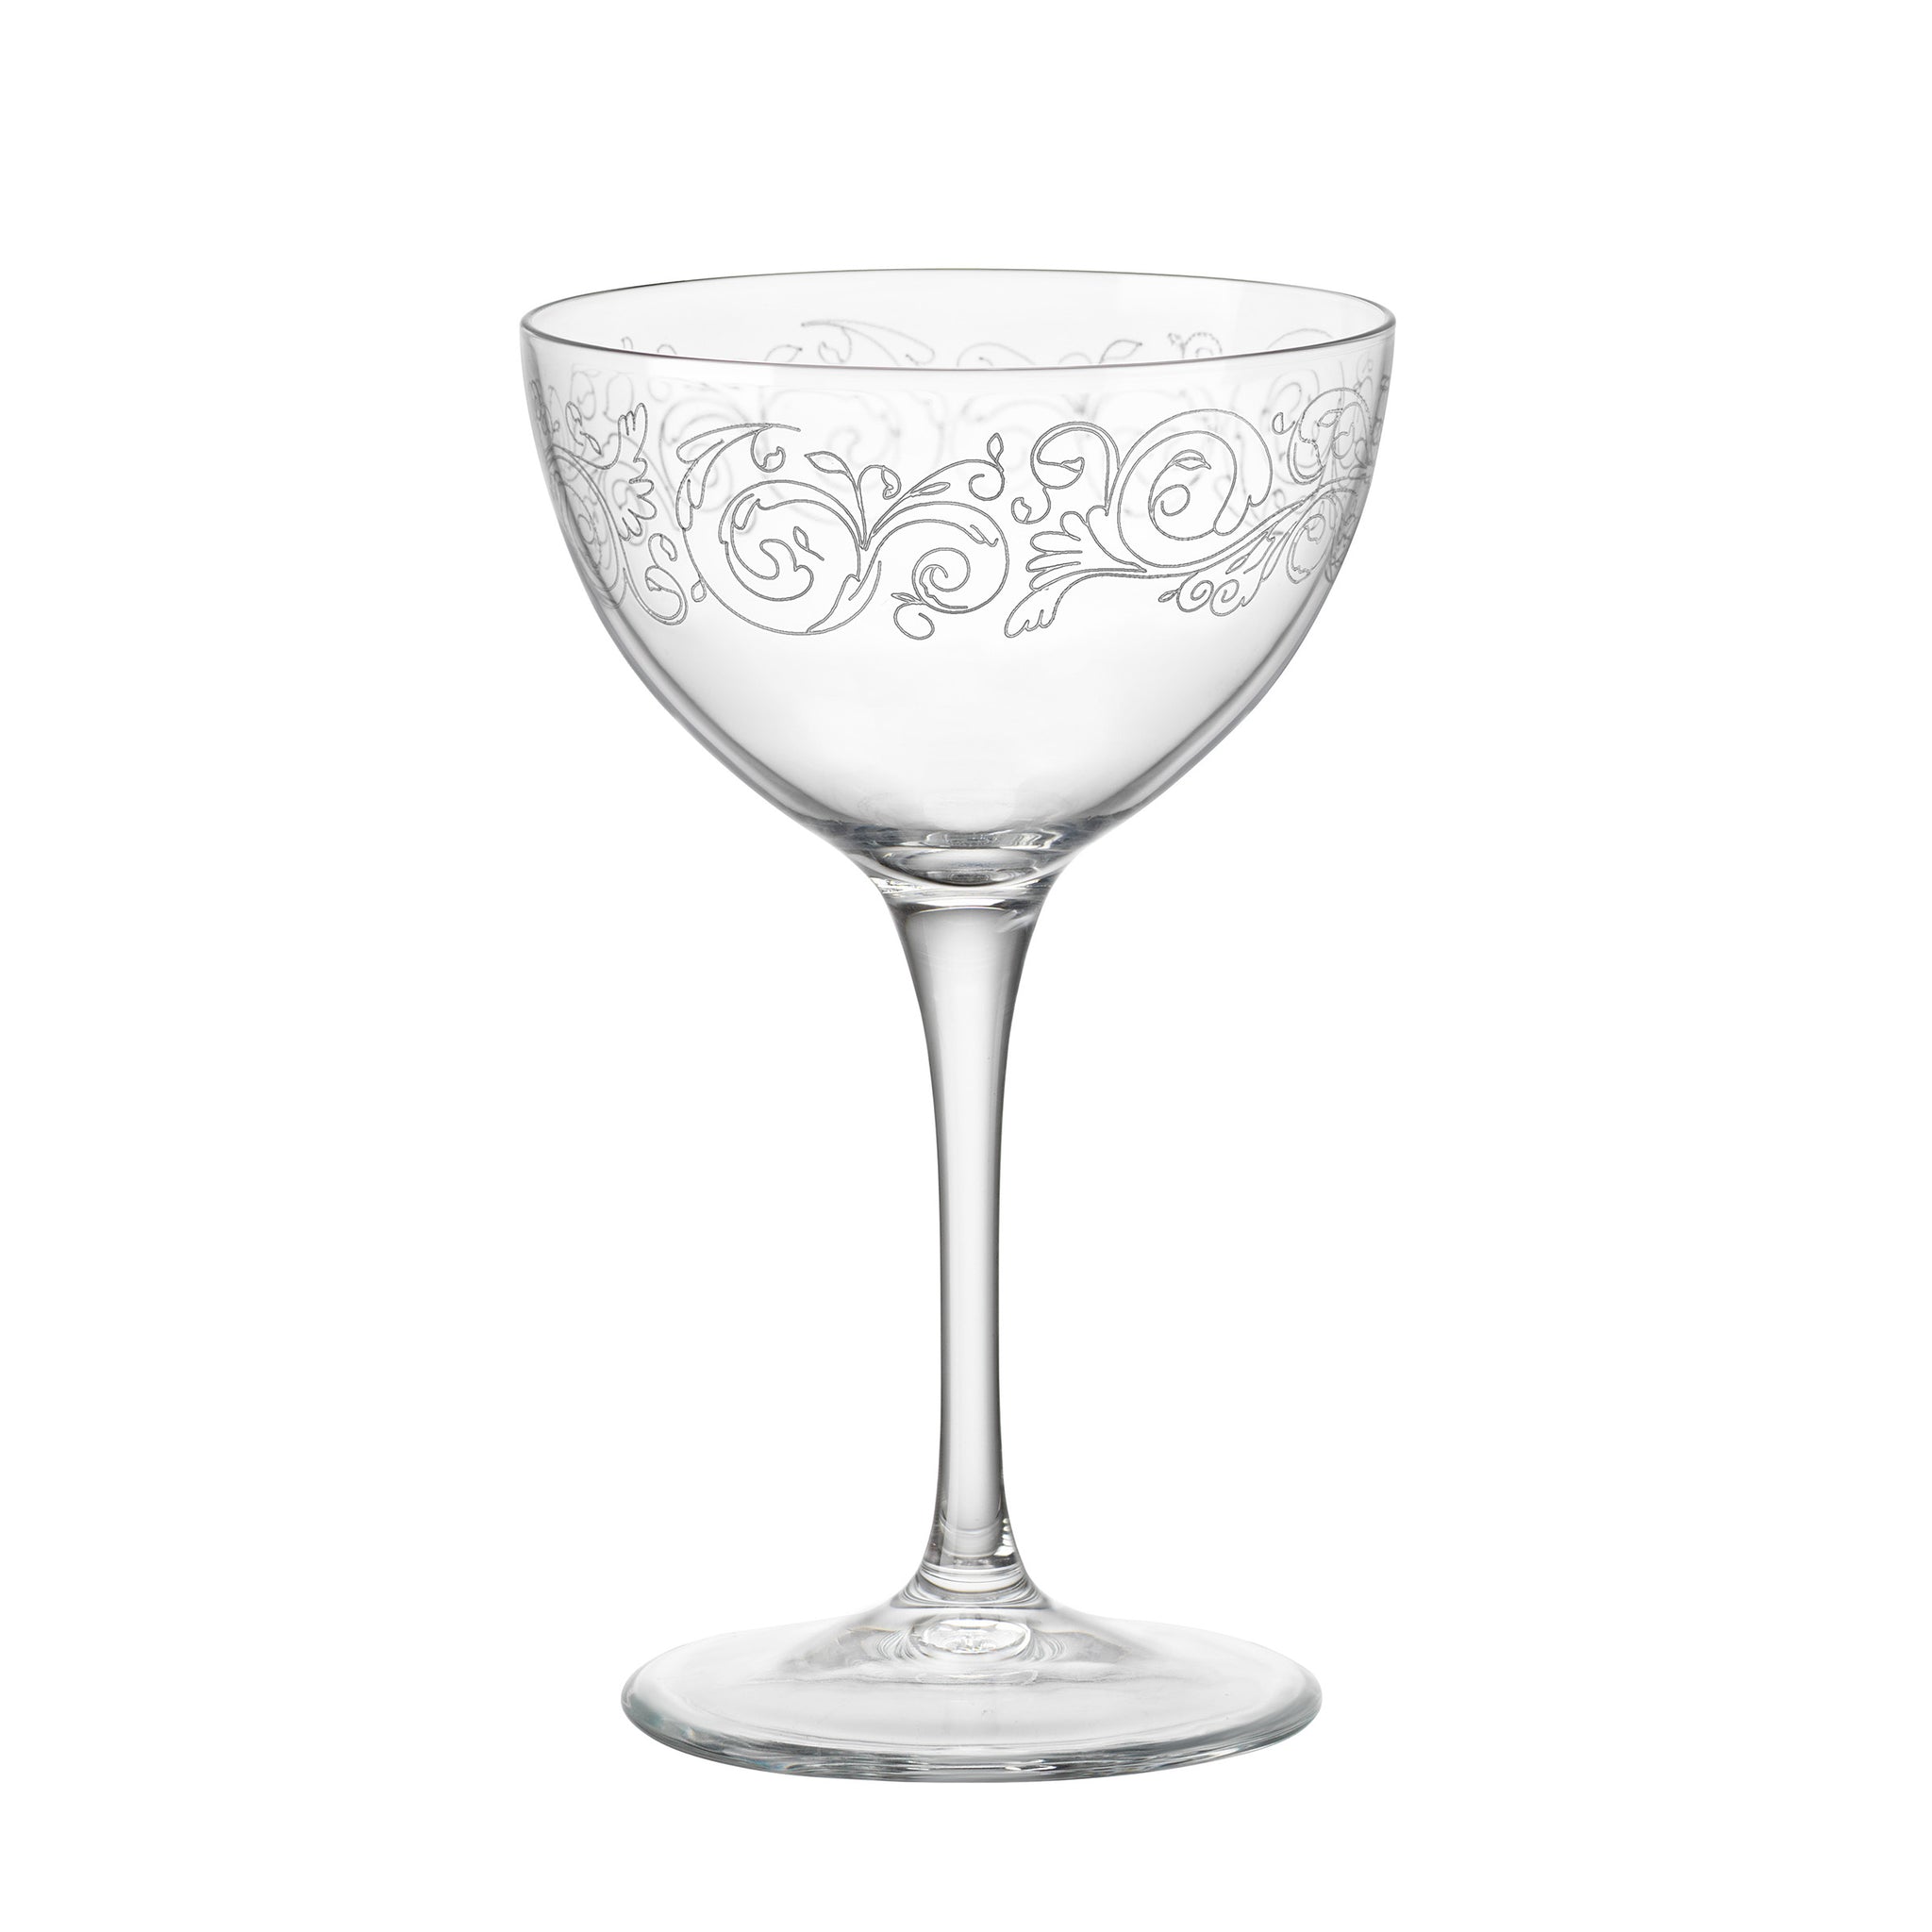 Bormioli Rocco Bartender 8 oz. Novecento Liberty Martini Cocktail Glasses (Set of 6)